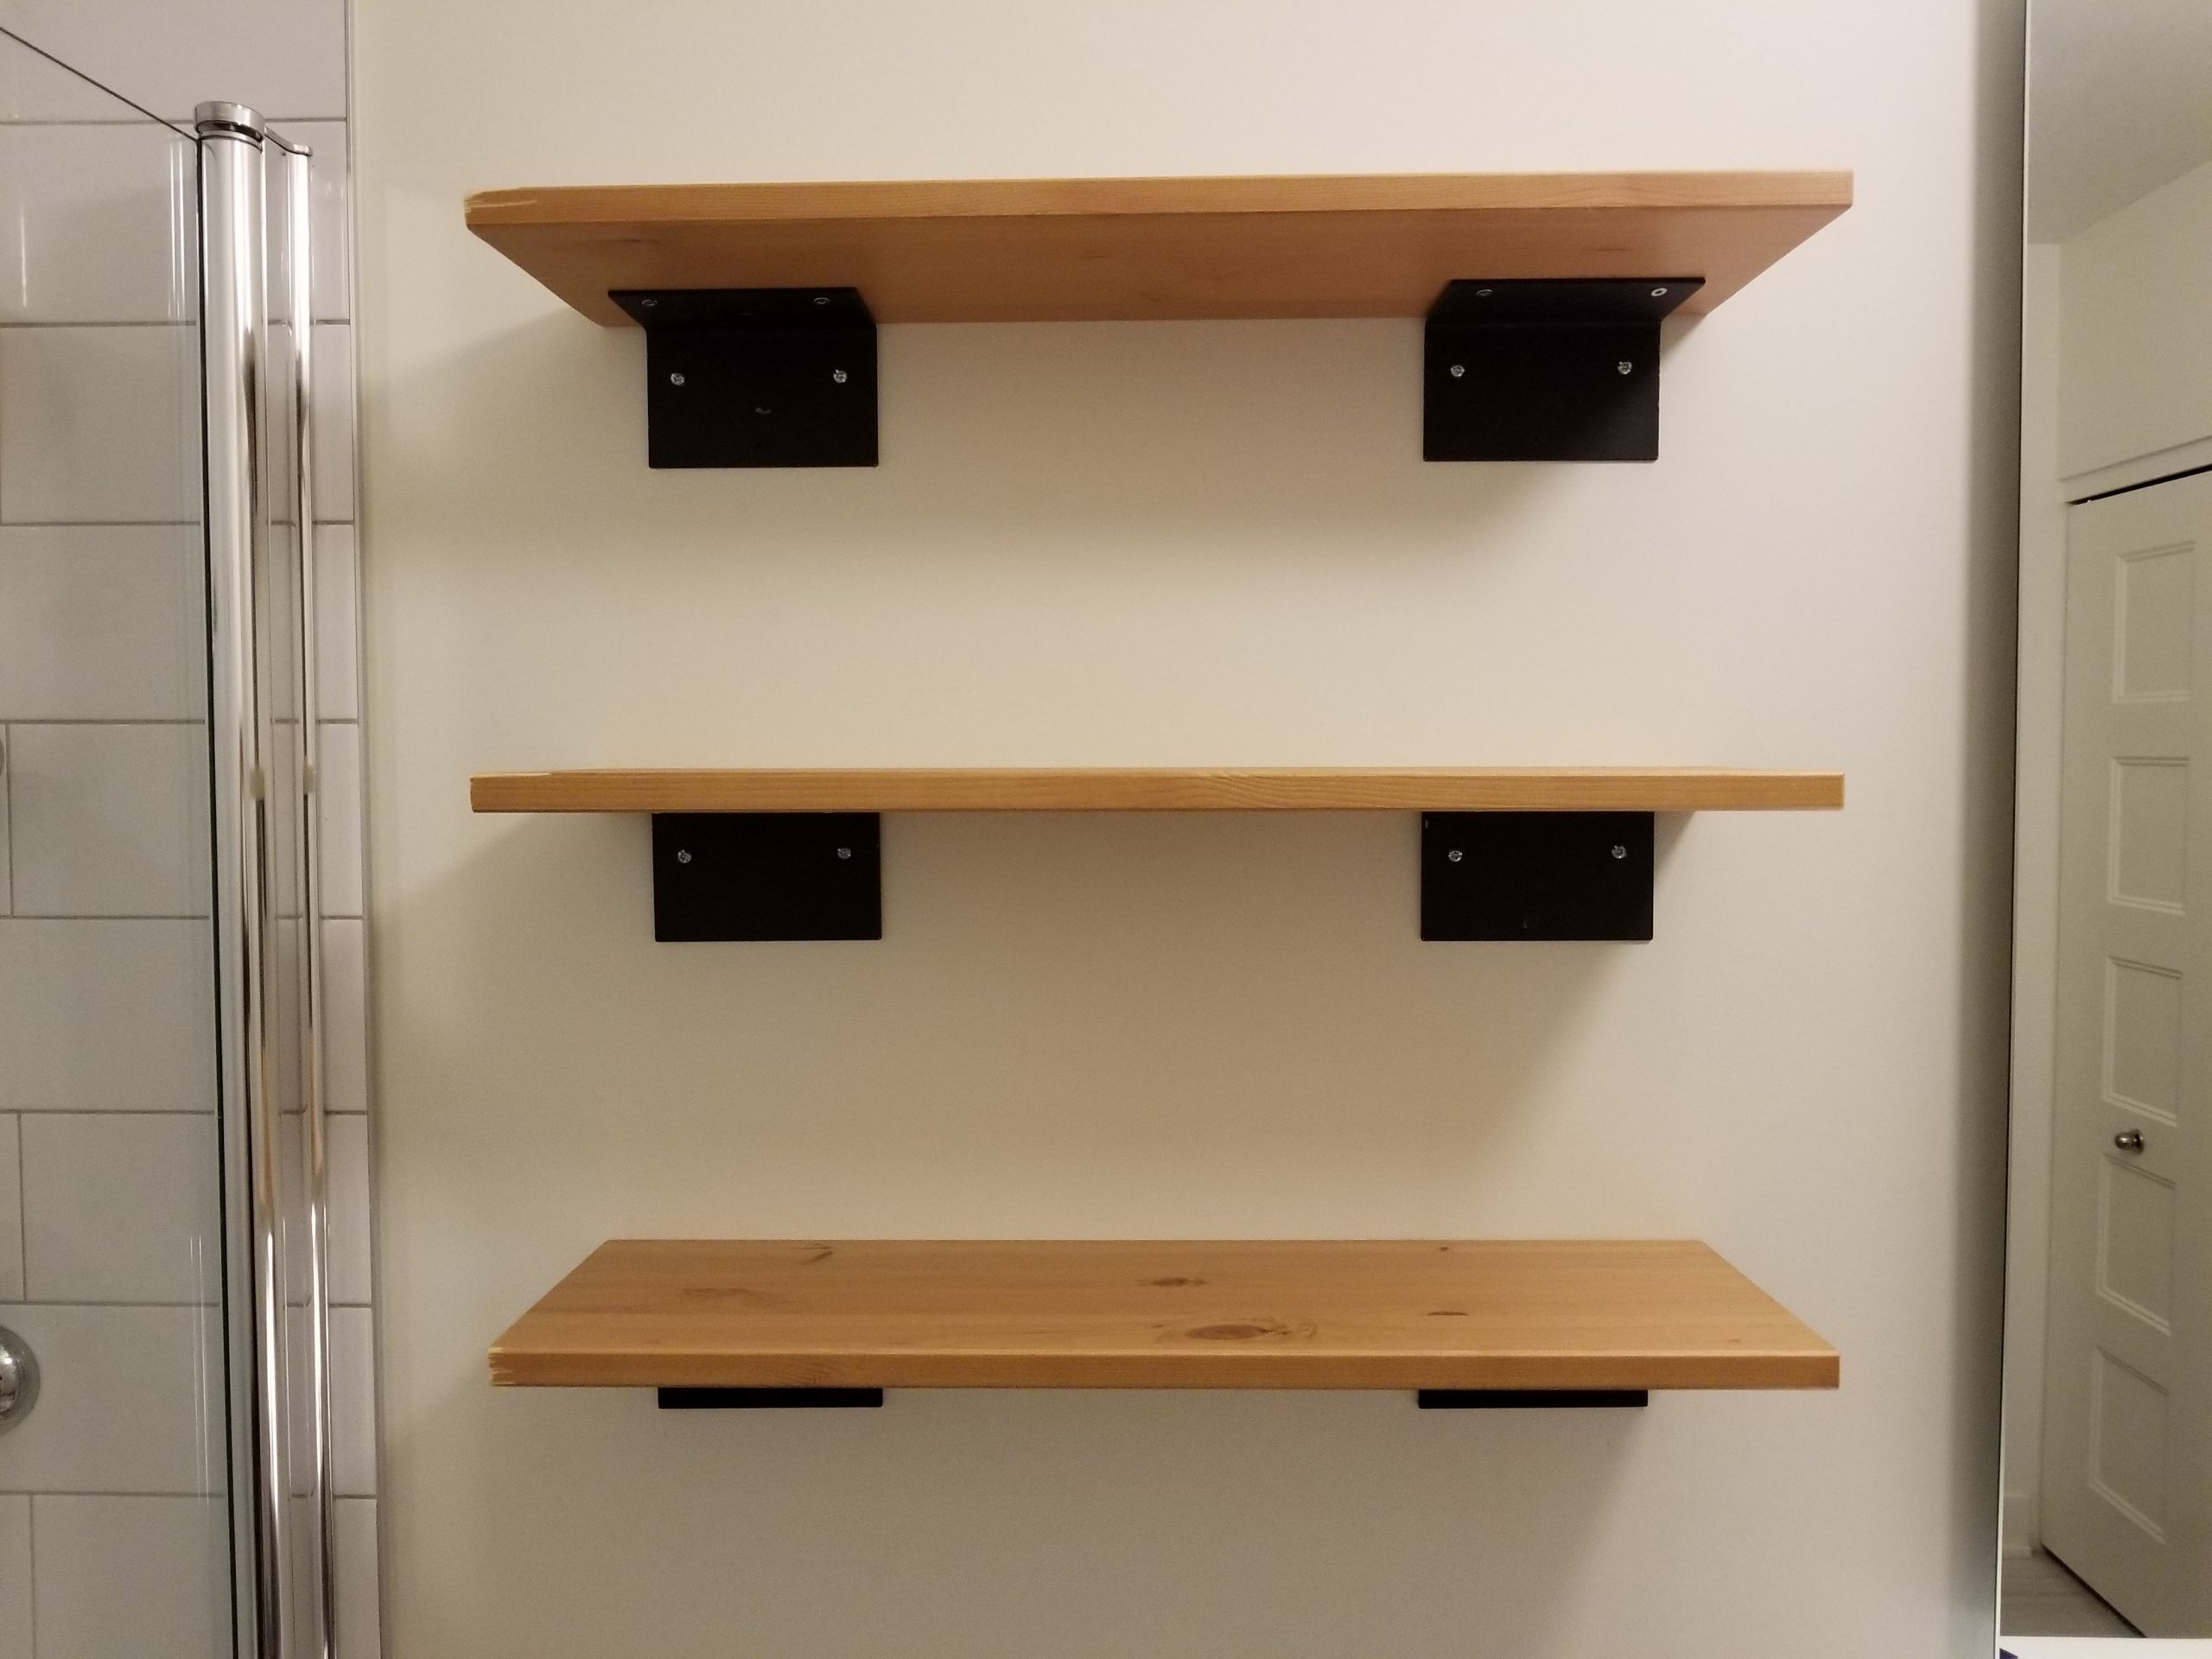 Ikea Kitchen Wall Shelves
 Ikea Wall Shelves How to Hang Shelves in 3 Easy Steps